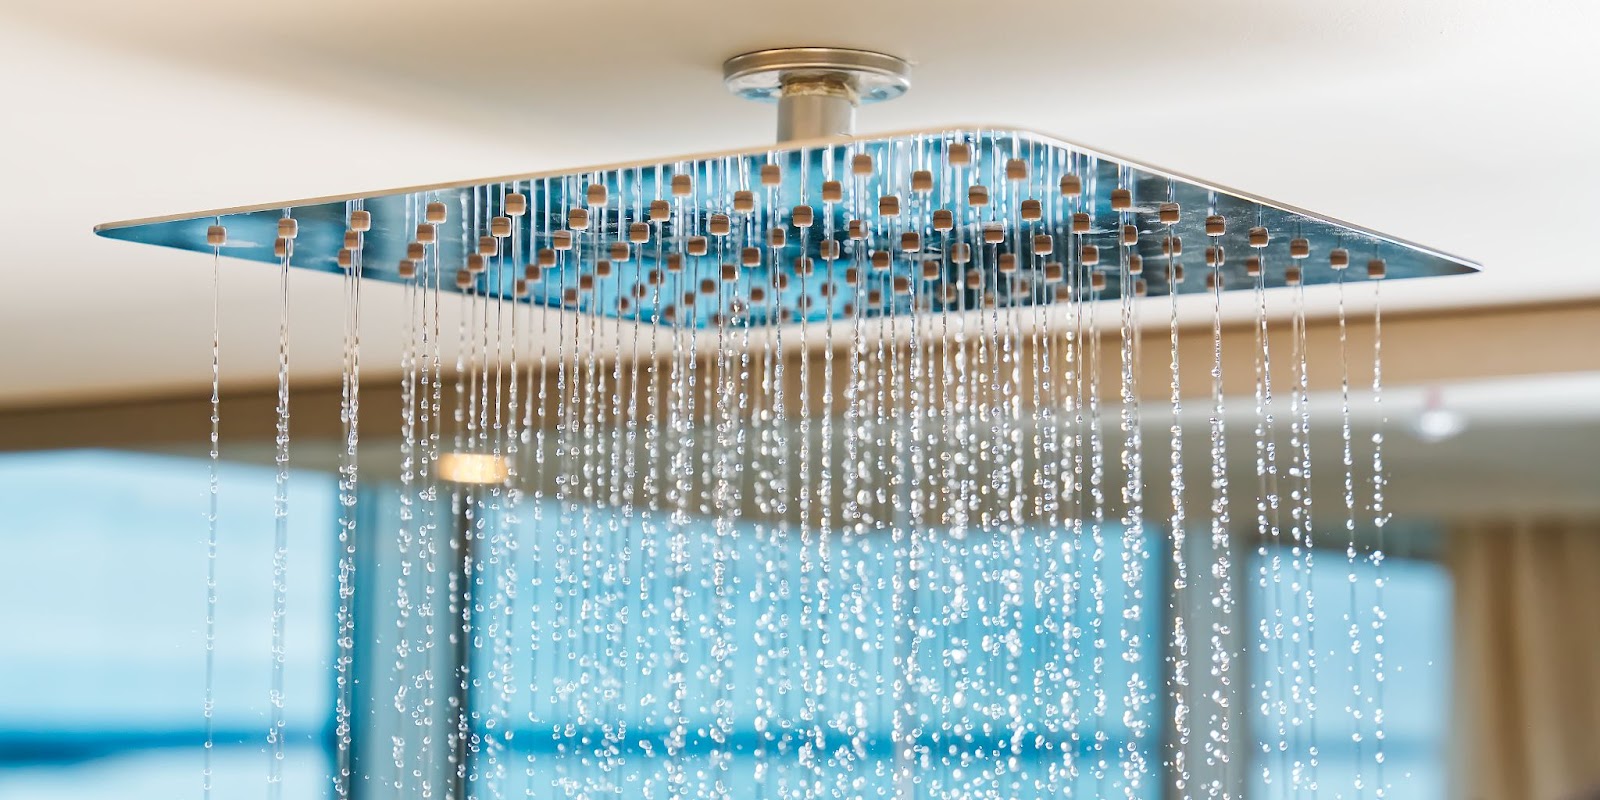 Water cascades from a chrome rain shower head, showcasing a modern design.